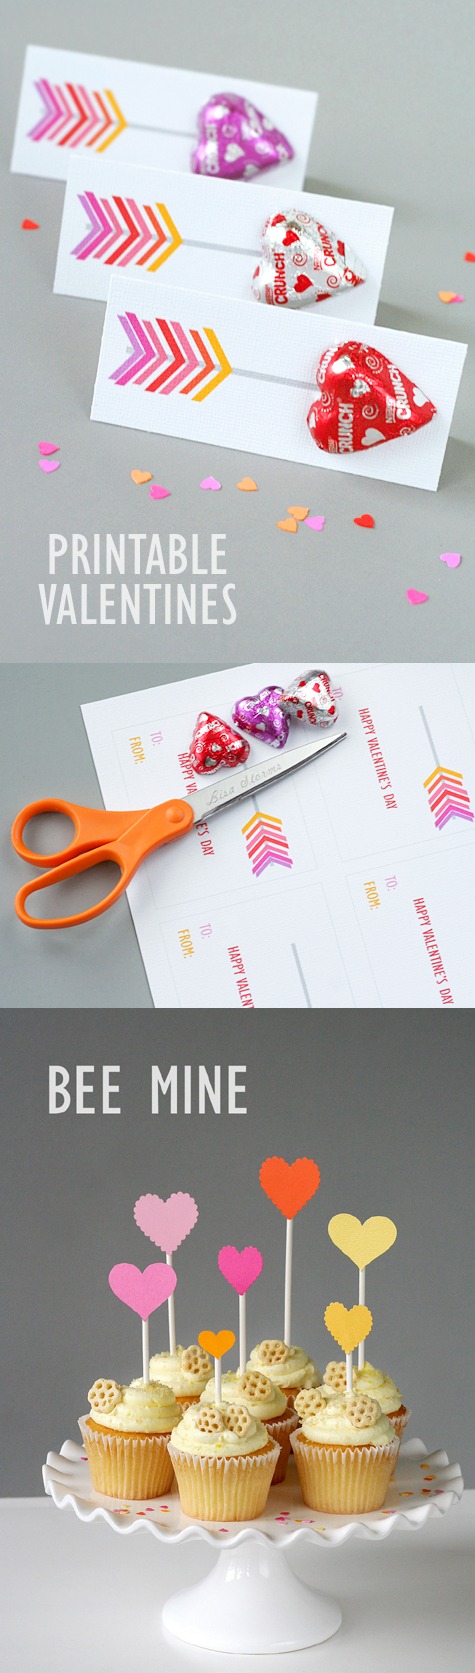 16-printable-arrow-valentines